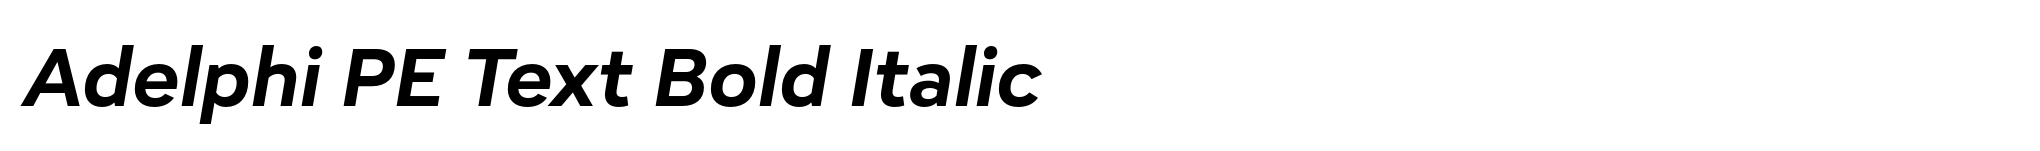 Adelphi PE Text Bold Italic image